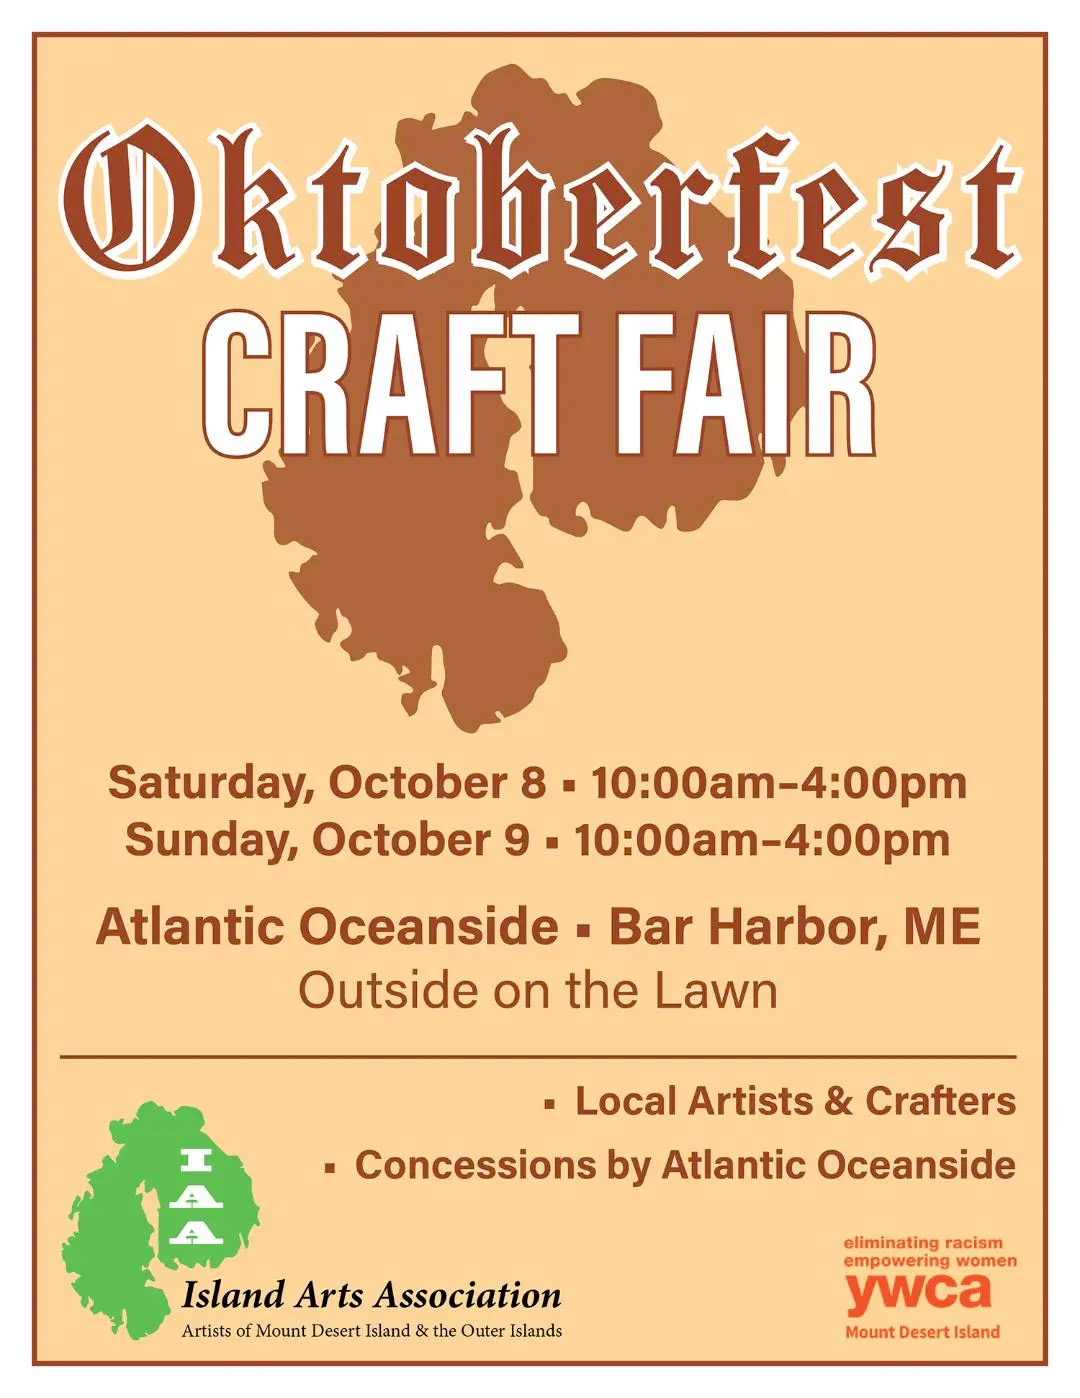 Island Arts Association’s Oktoberfest Craft Fair